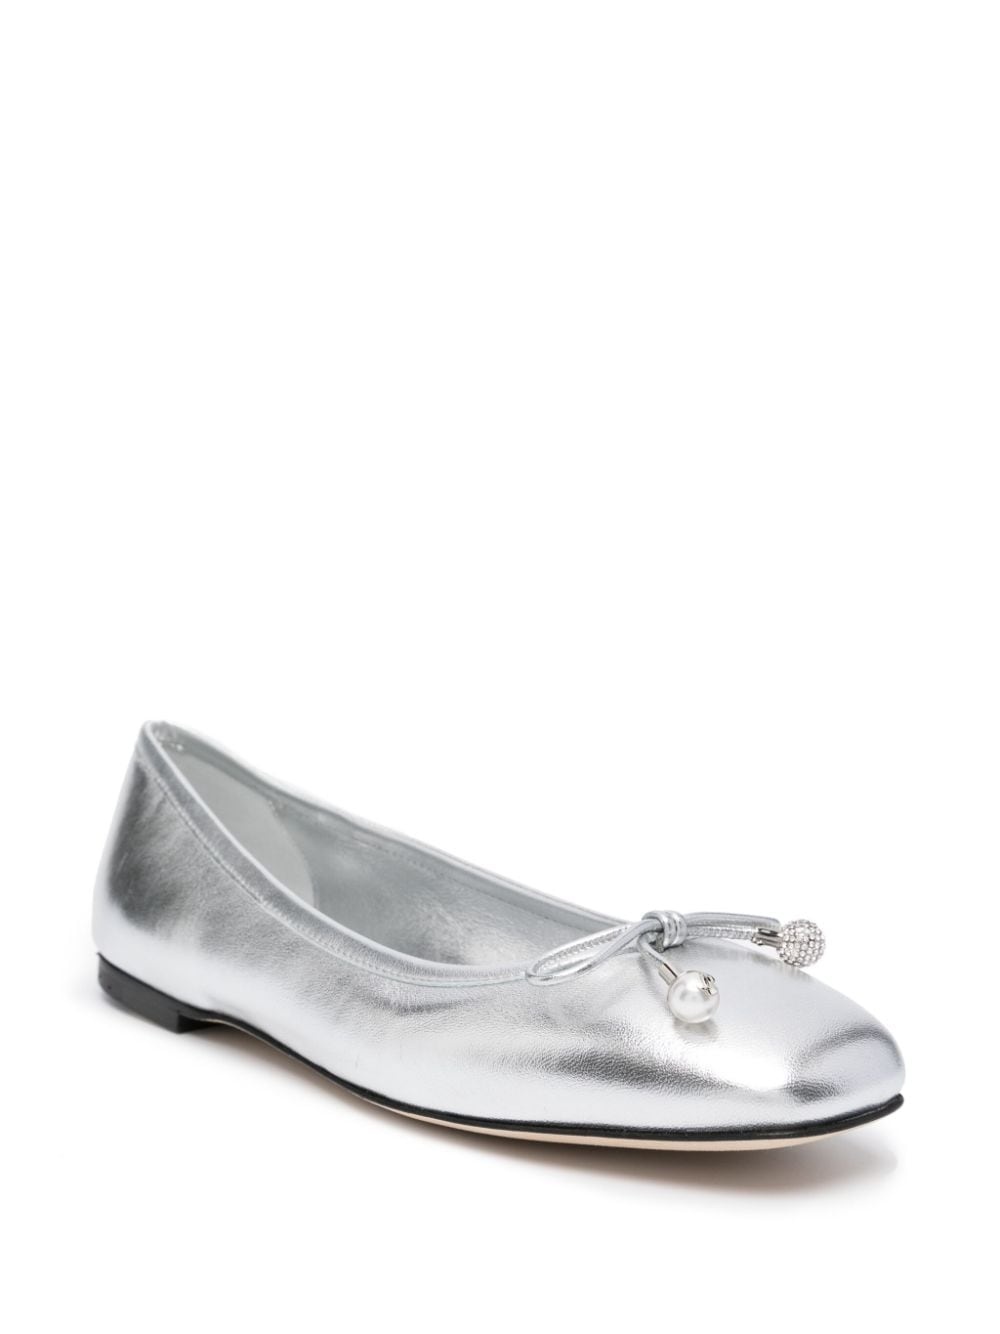 Elme metallic ballerina shoes - 2